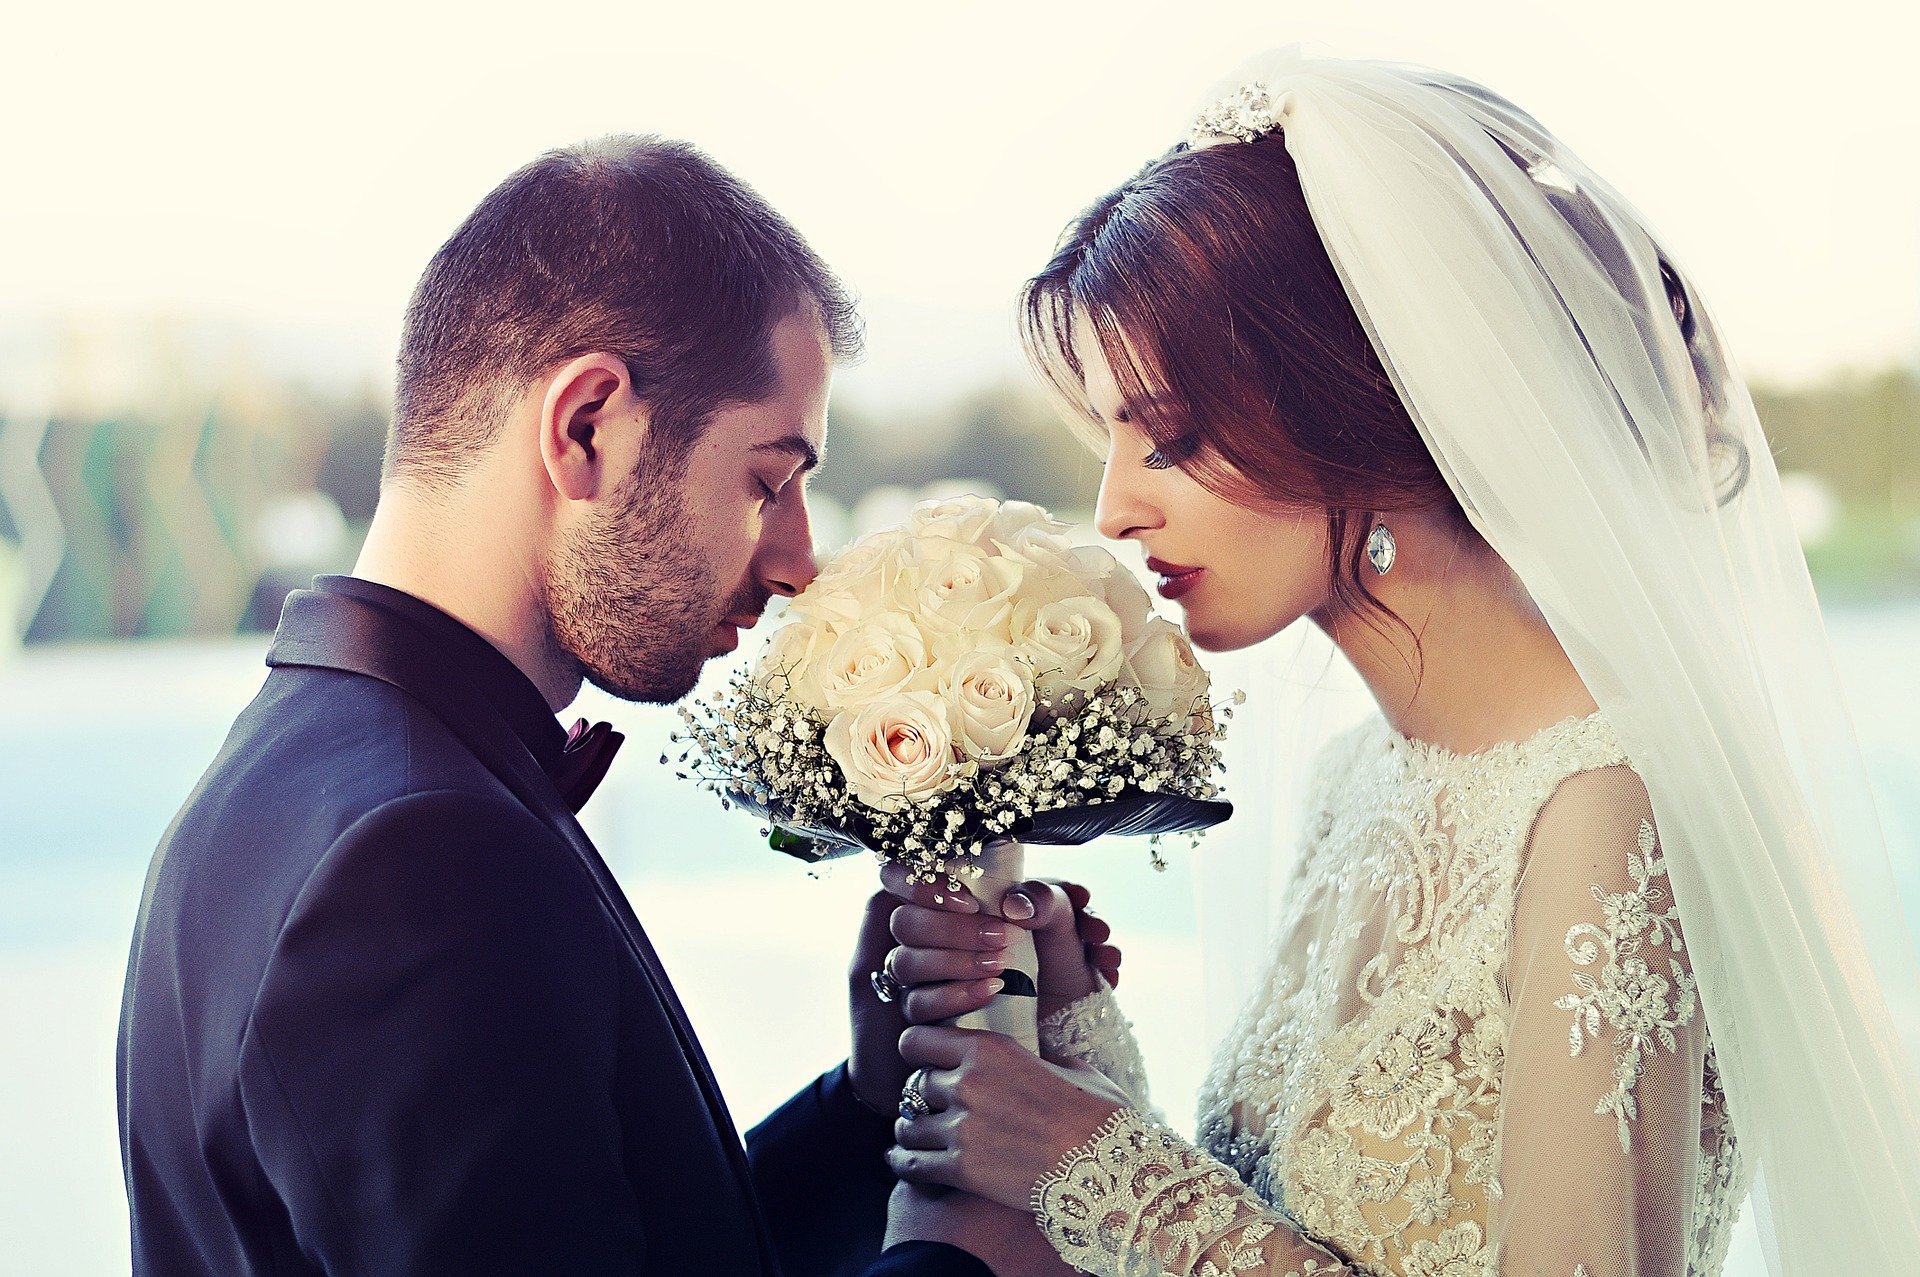 Pareja contrayendo matrimonio. Fuente: Pixabay